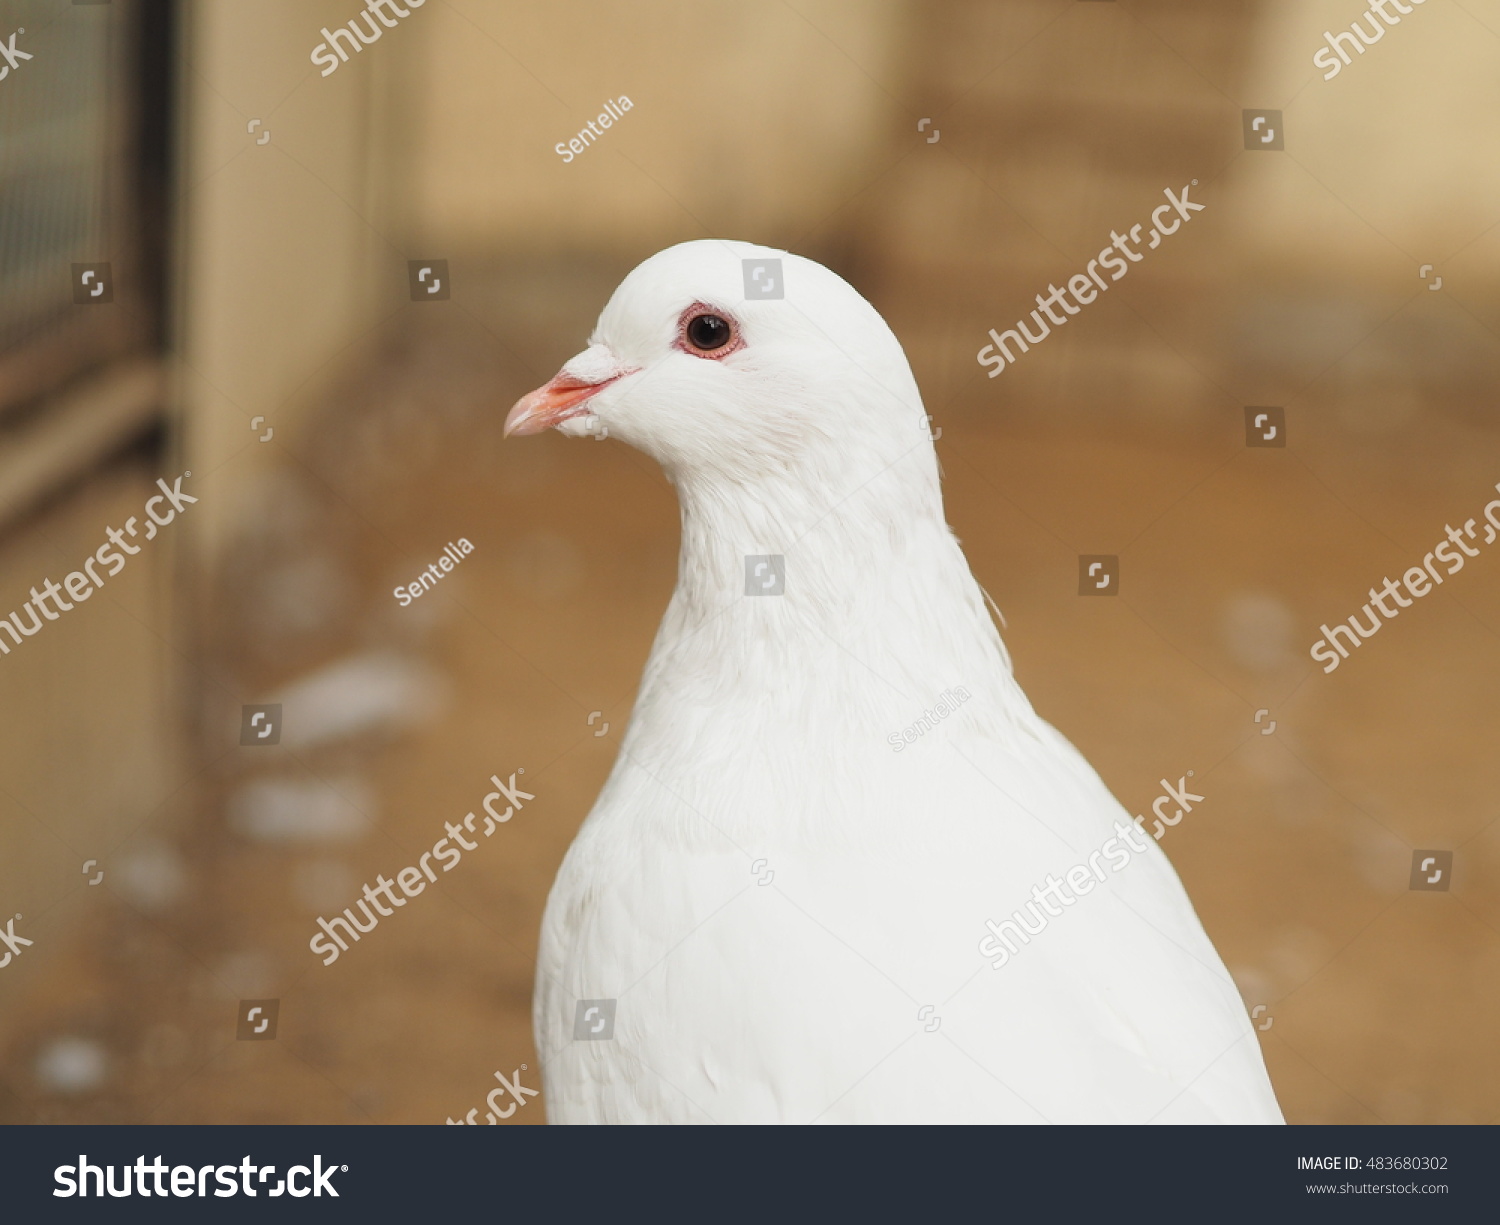 White dove #483680302